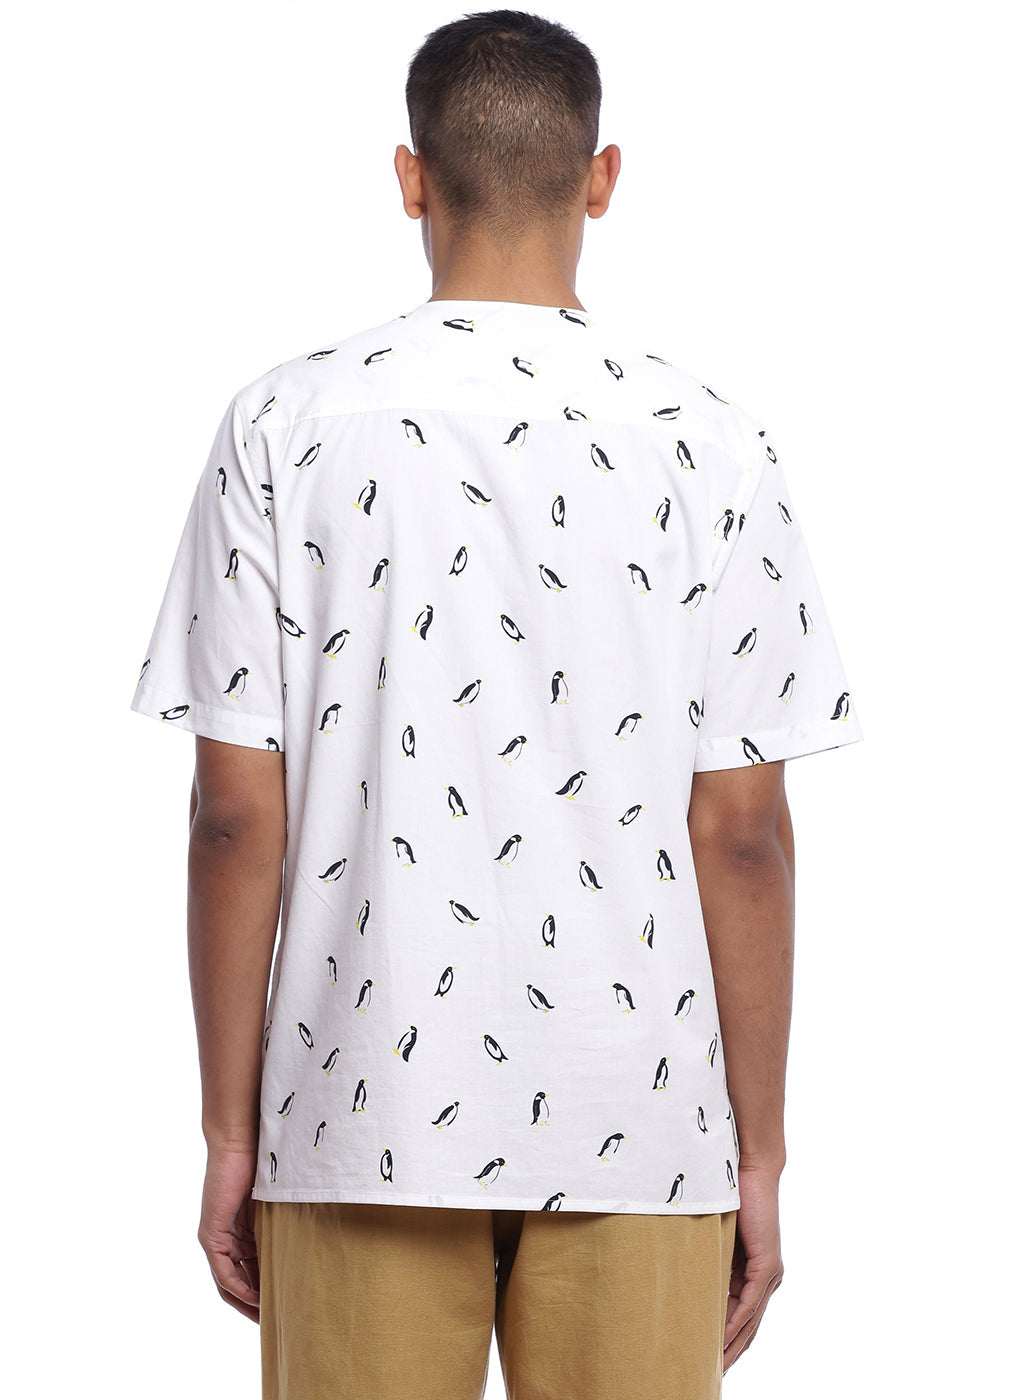 Penguin Print Shirt - Genes online store 2020